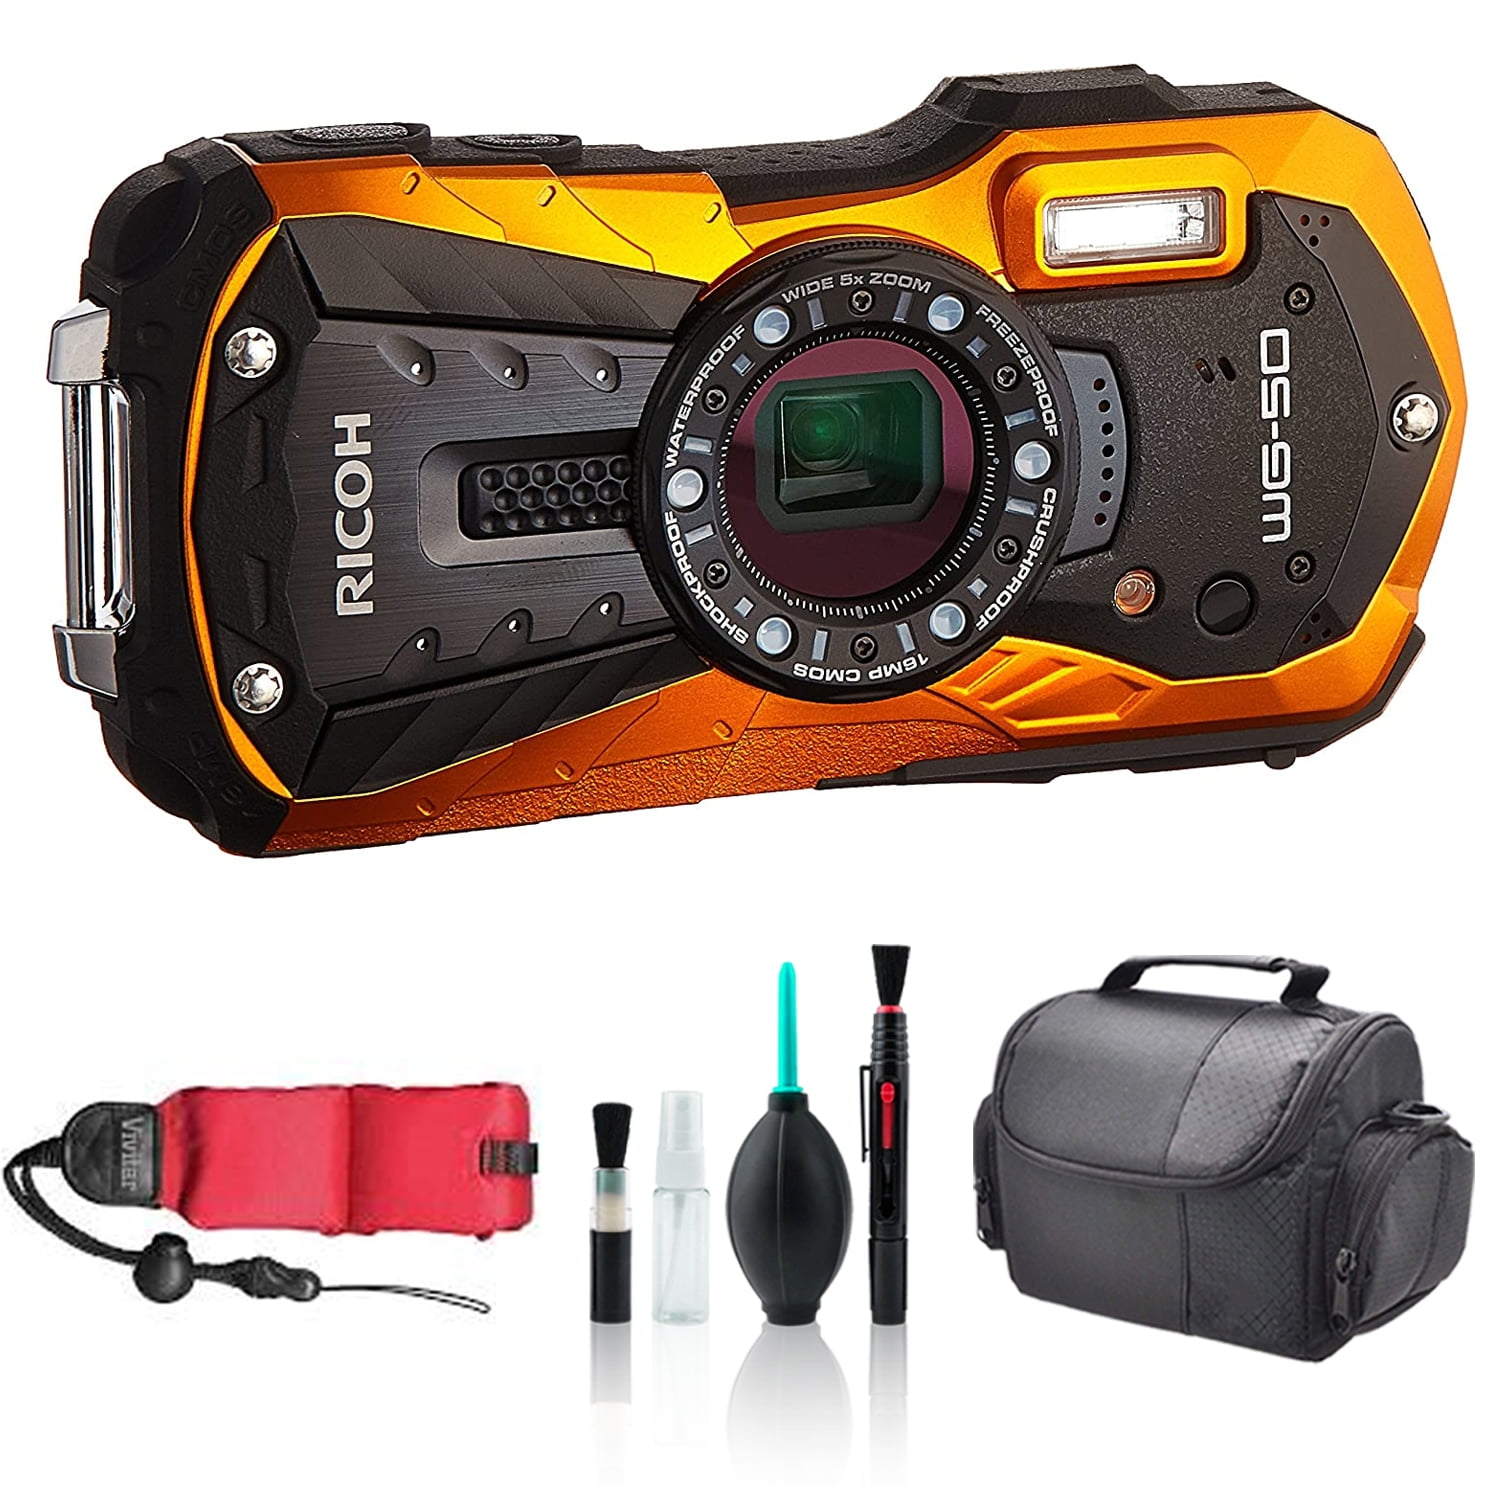 Ricoh WG-50 Waterproof Digital Camera (Orange) - with Carrying Case + More  - International Model